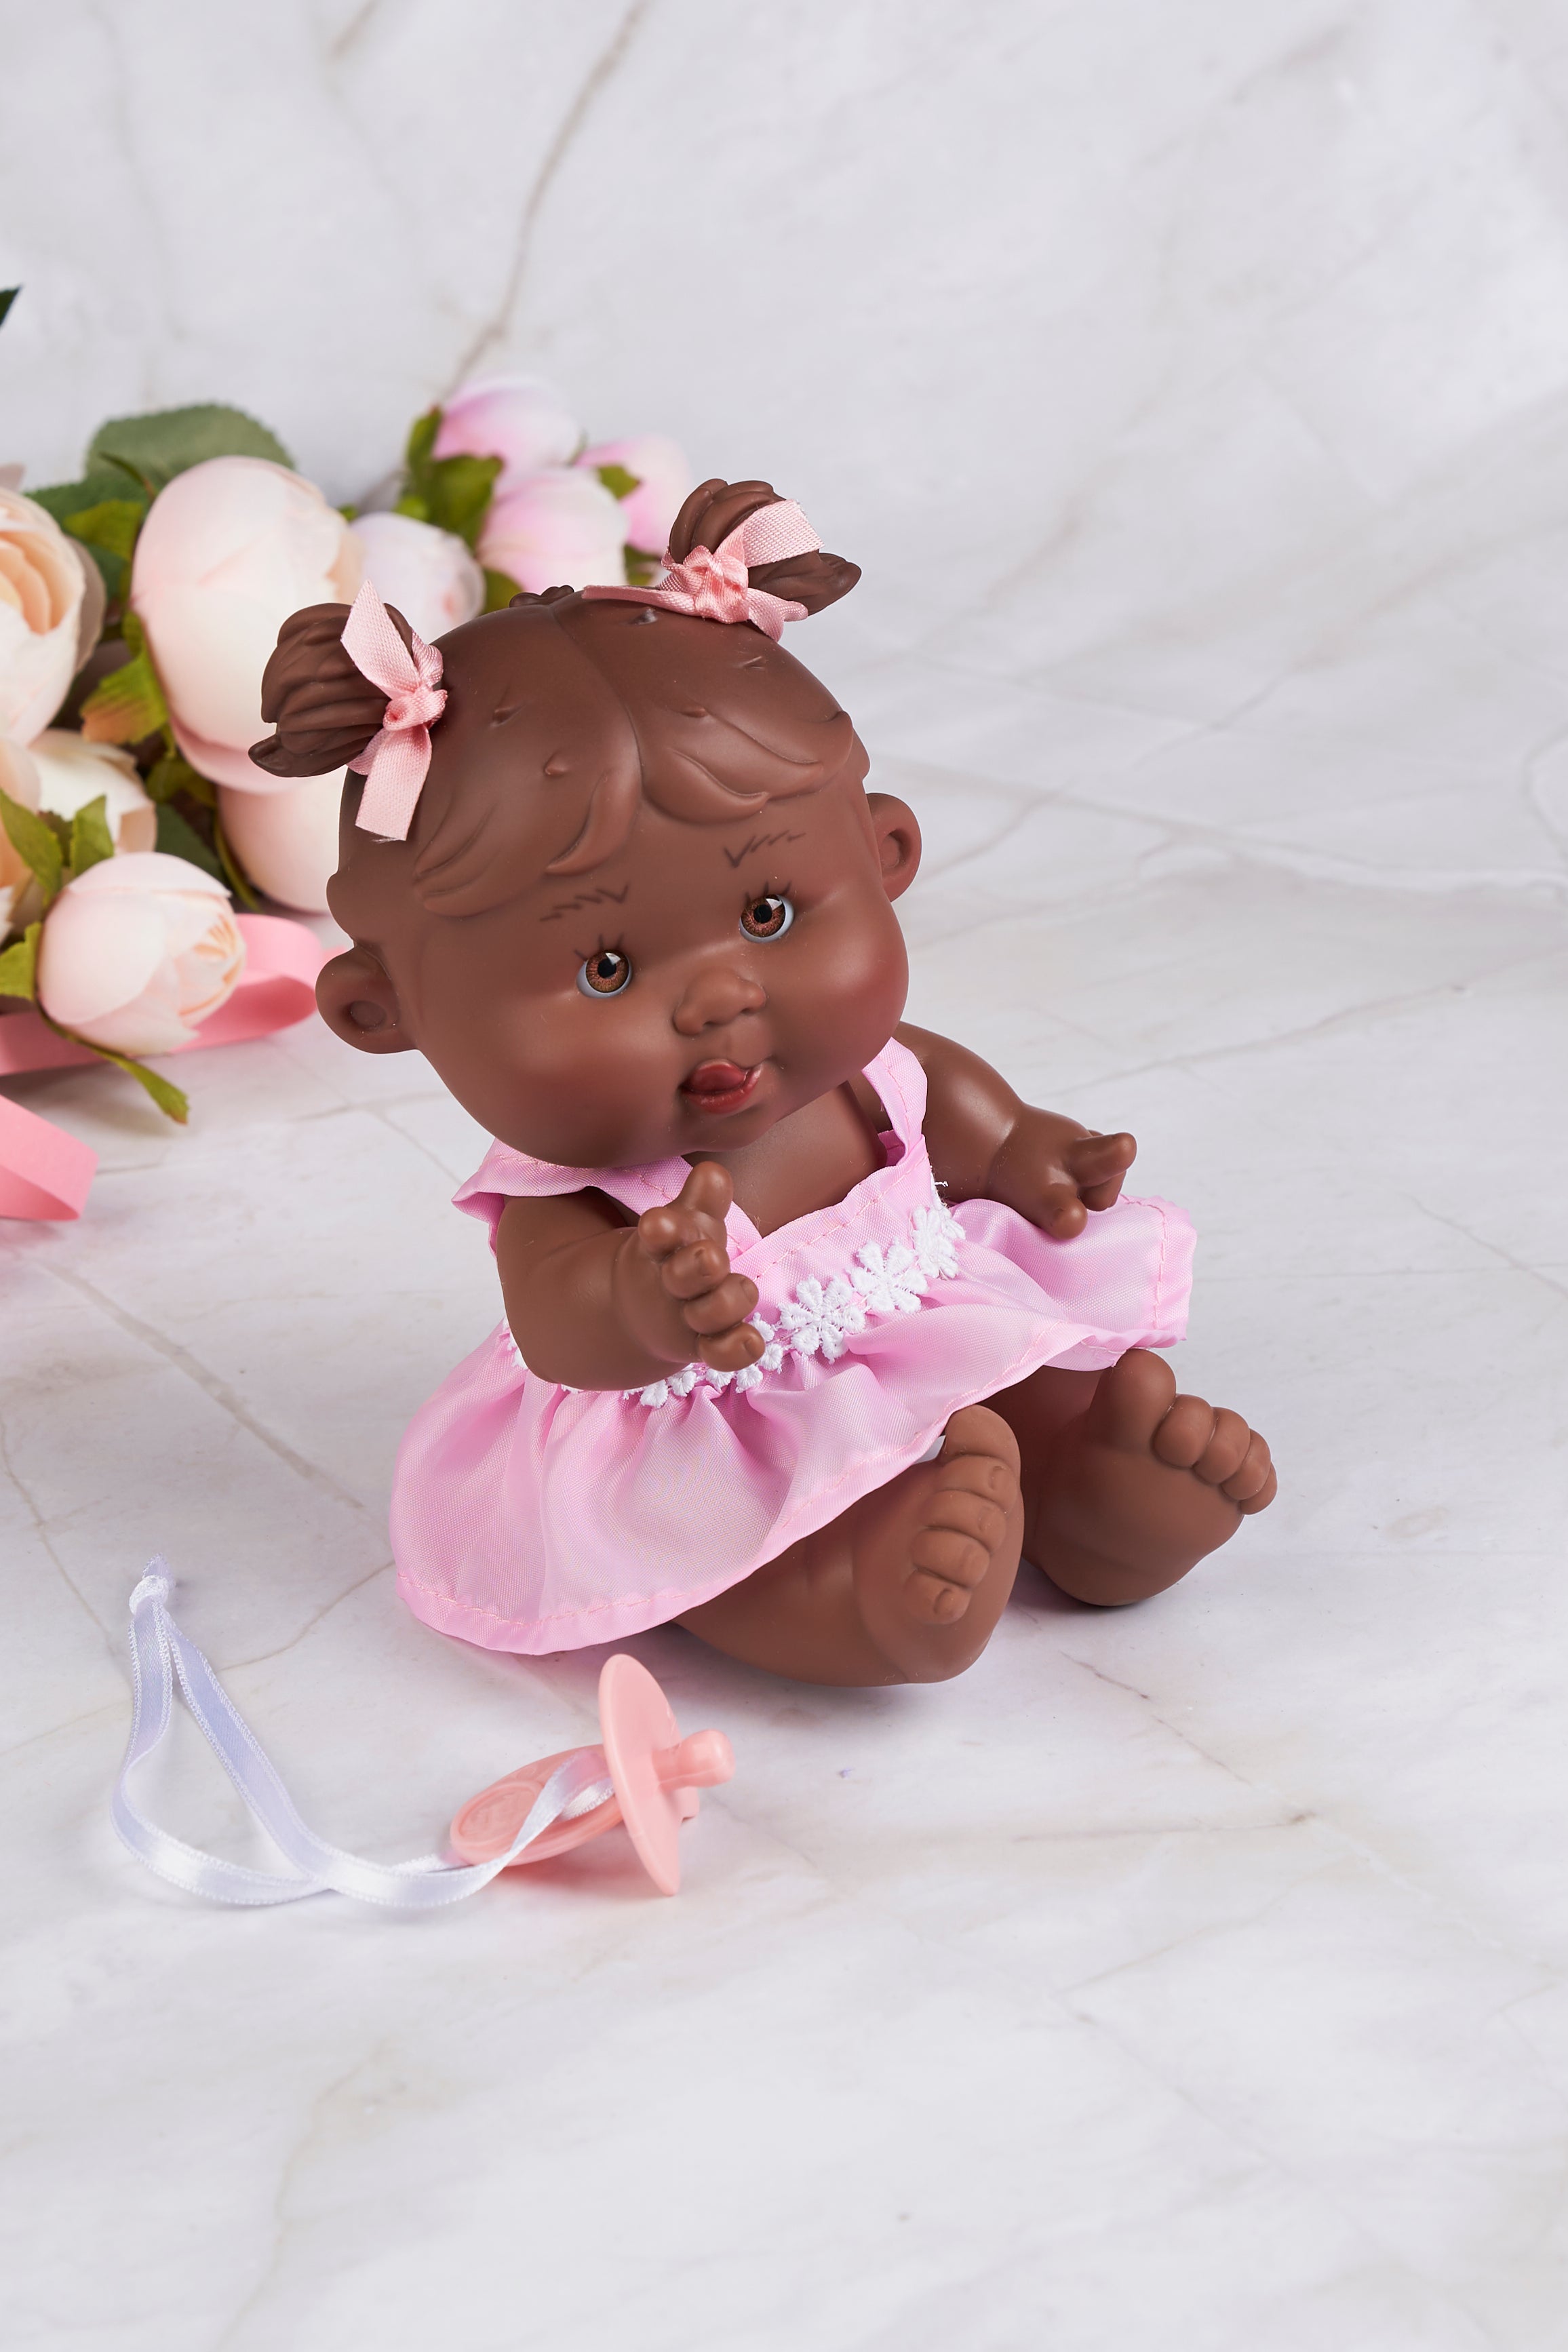 Papusa Parfumata Pepotines Afro, cu Rochie Bretele roz Model Strengar, 21 cm 0494 Nines - Camera Bebelusului